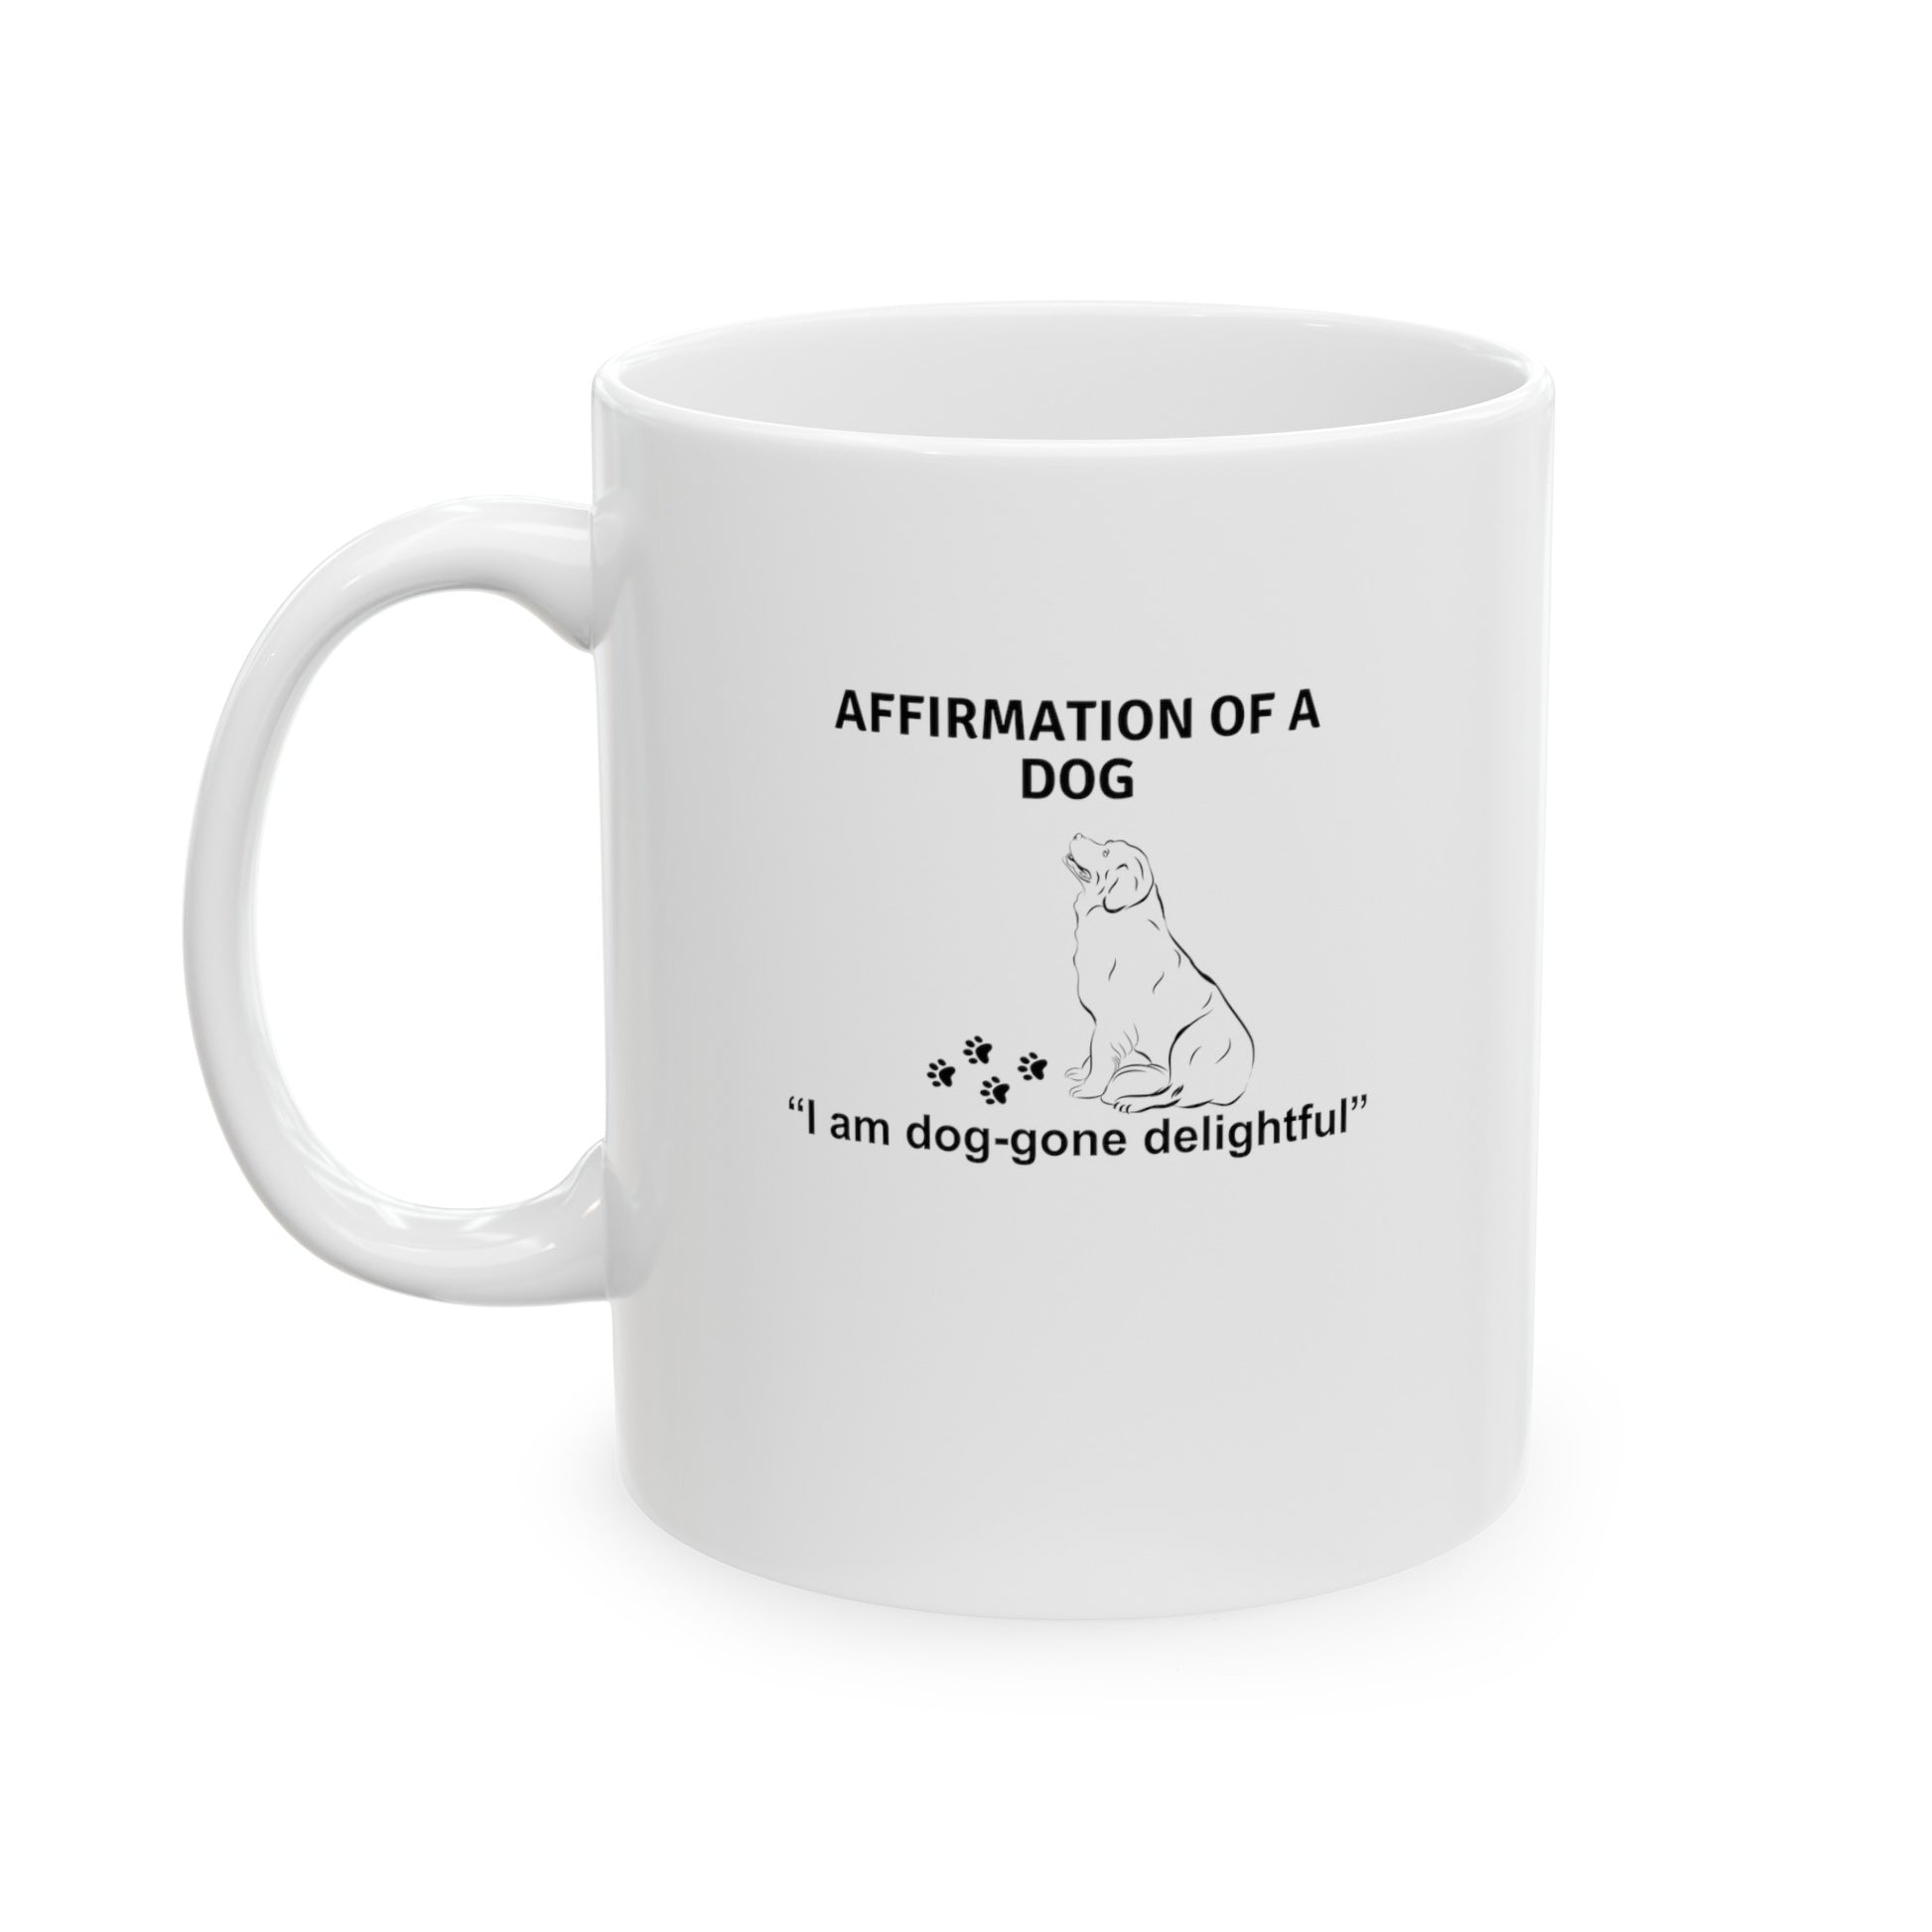 Affirmation of a dog mug white 11oz